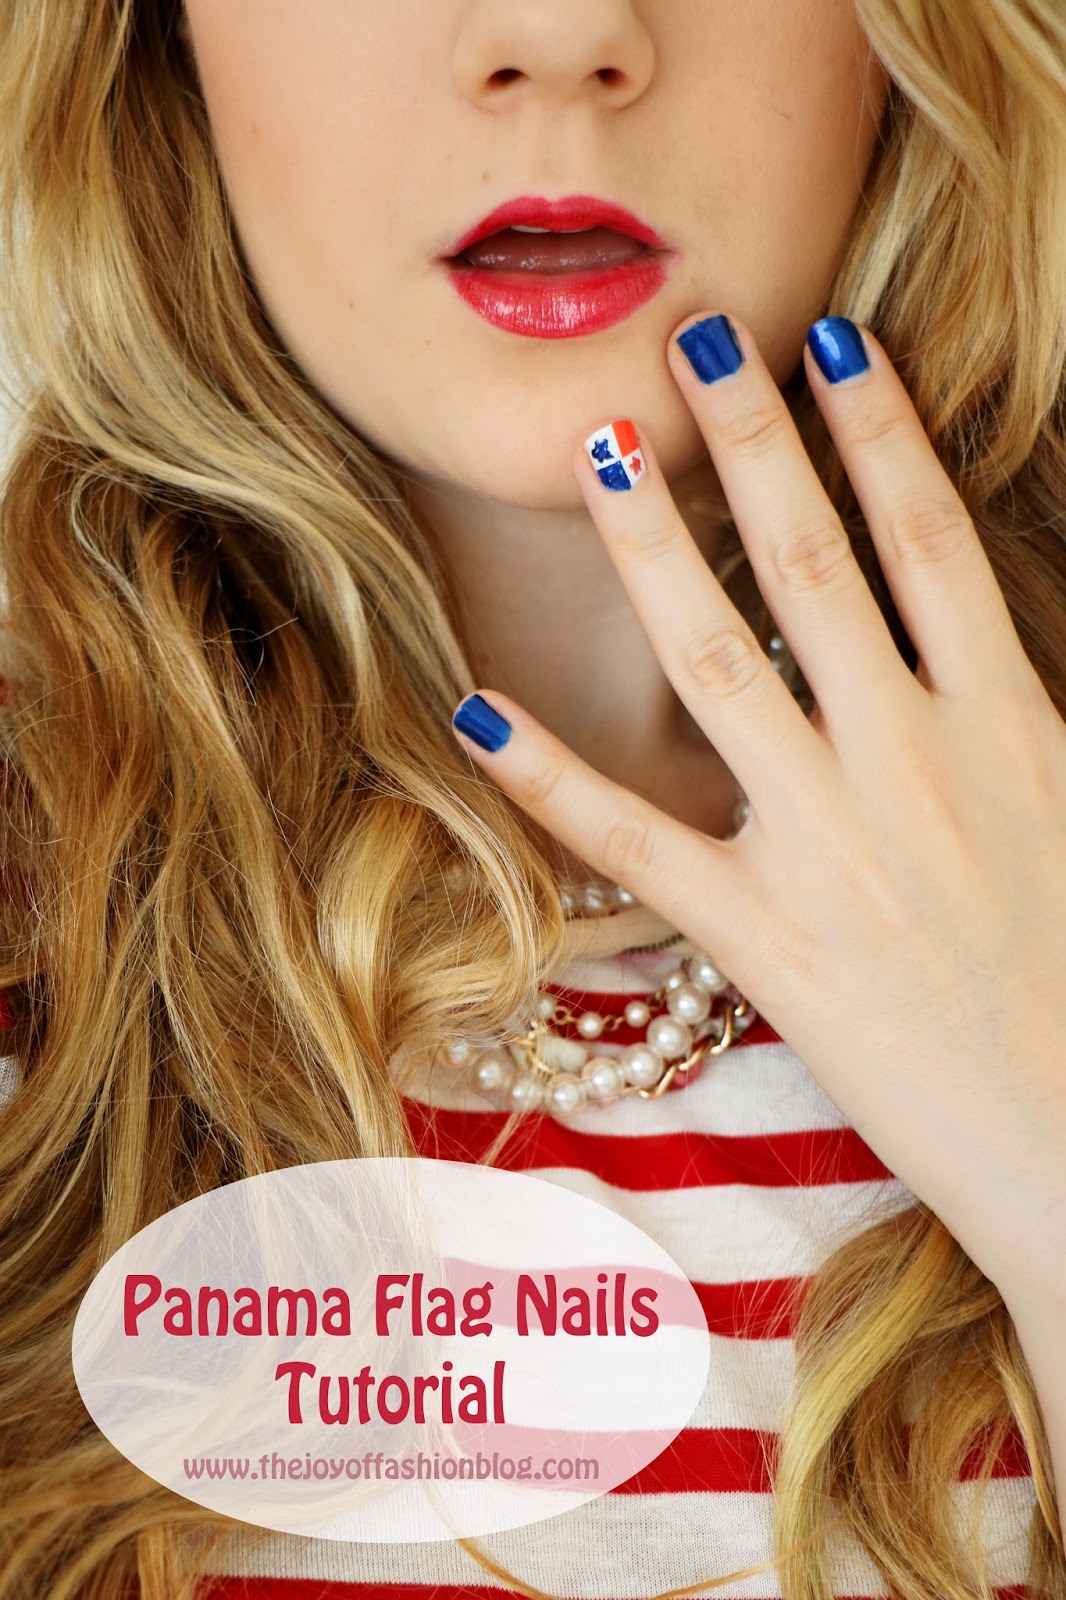 Loving these super cute flag nails!